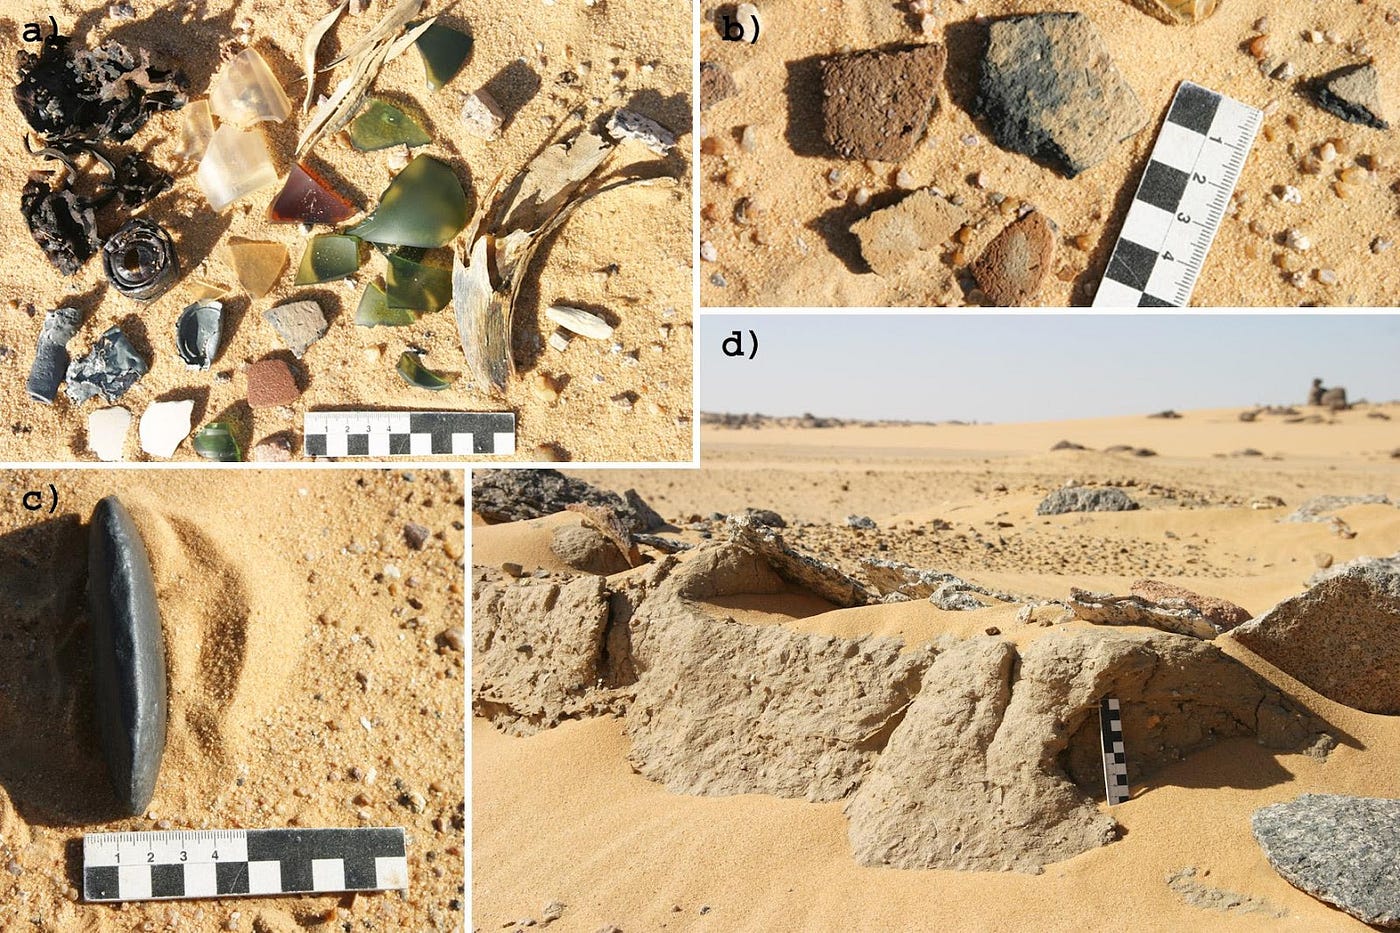 Geomorphologisch-archäologischer Survey in Abu Tabari — Wadi Howar, Sudan., by David Haberlah